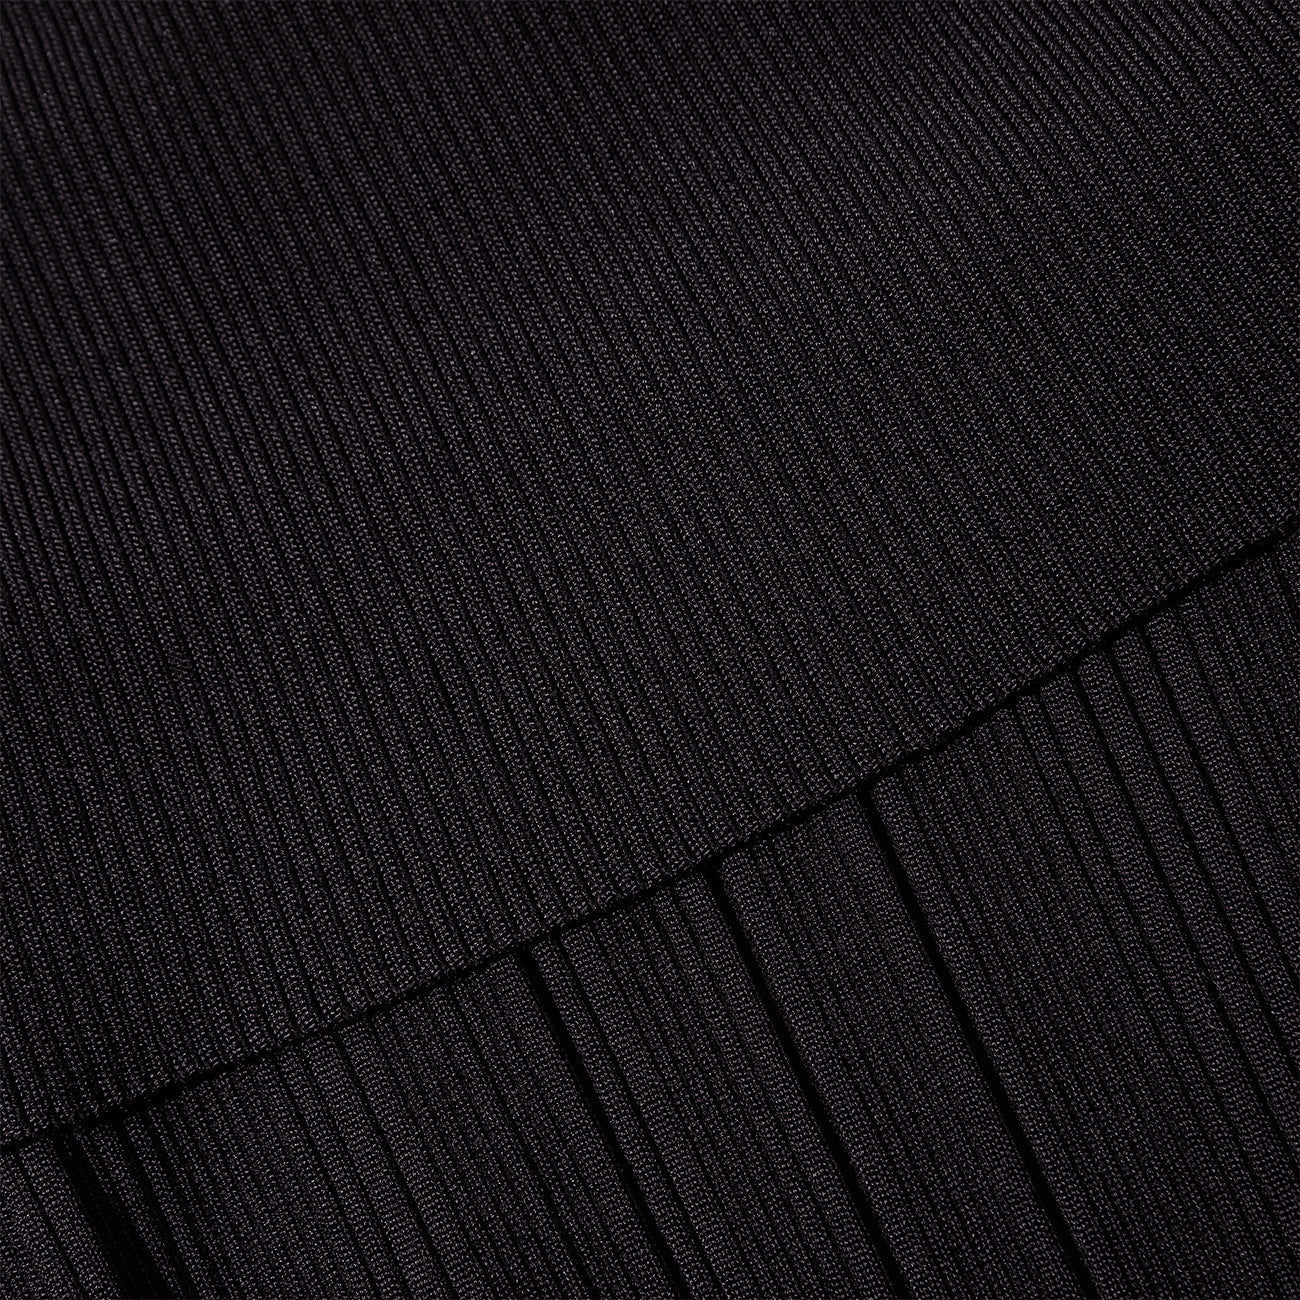 Black Ribbed Knit Midi Dress